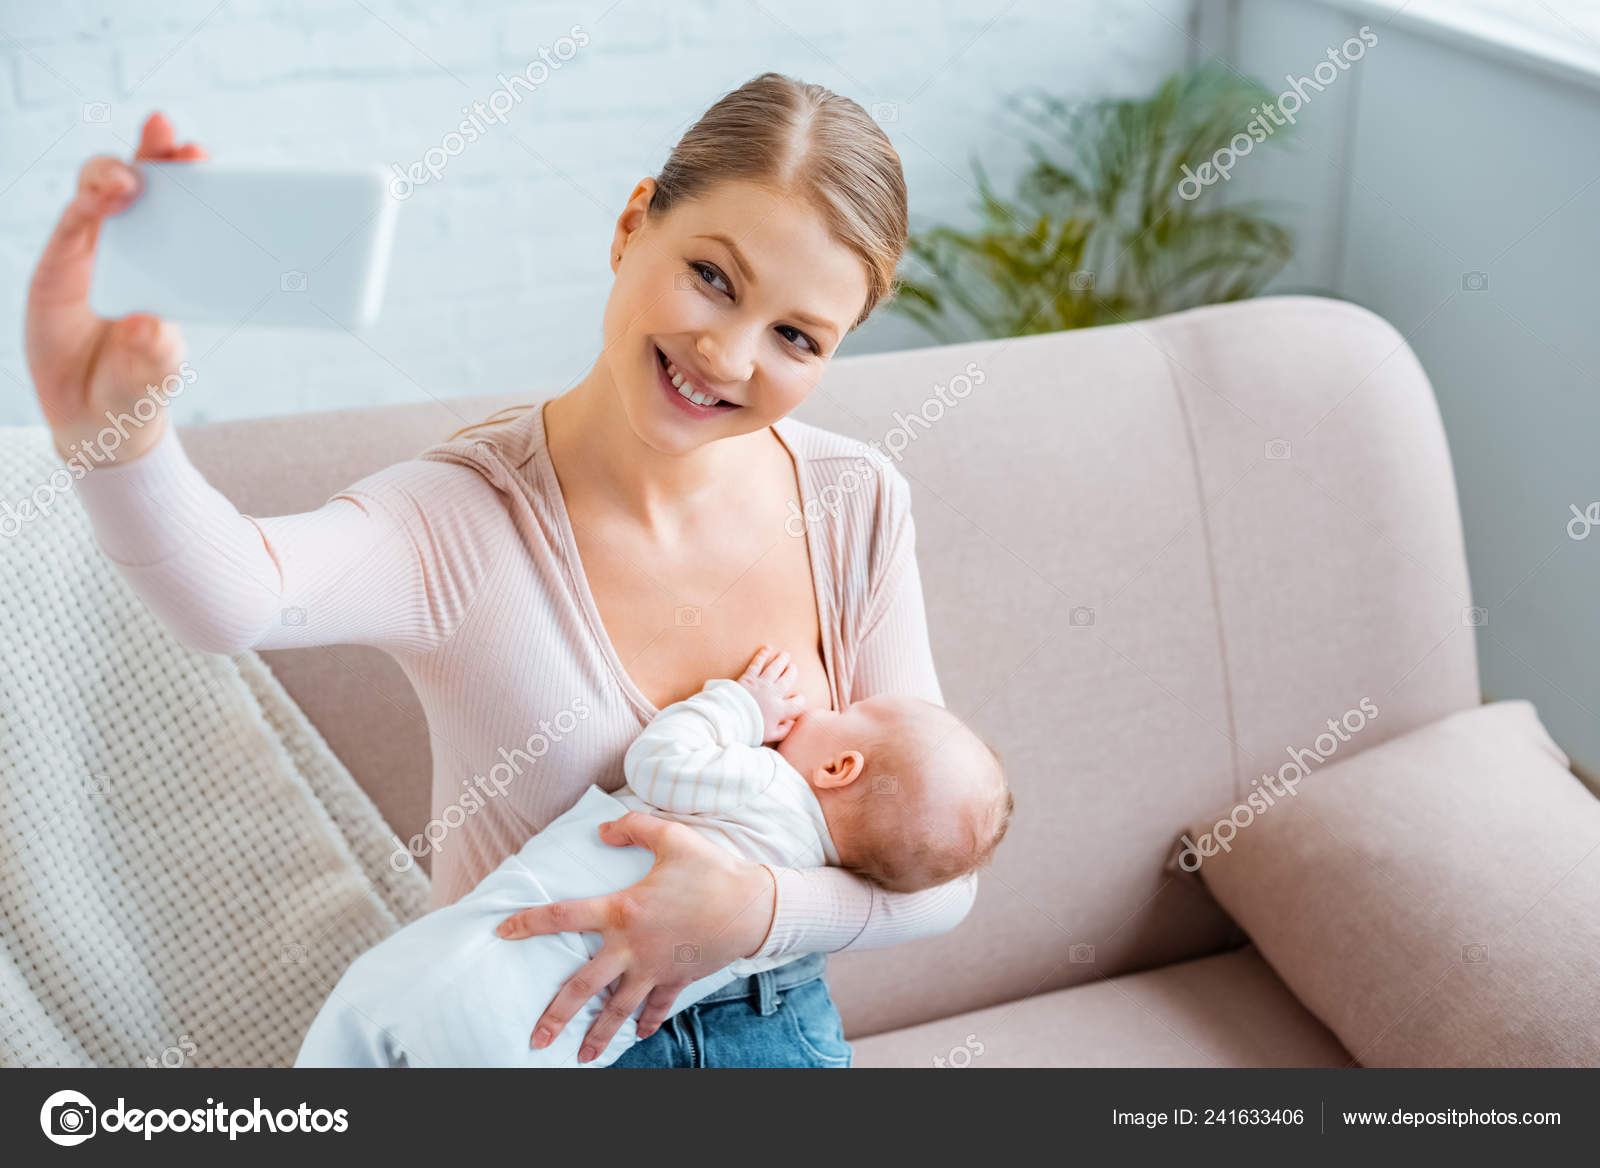 Baby Eating Mothers Milk Mother Breastfeeding Stock Photo 1239630469